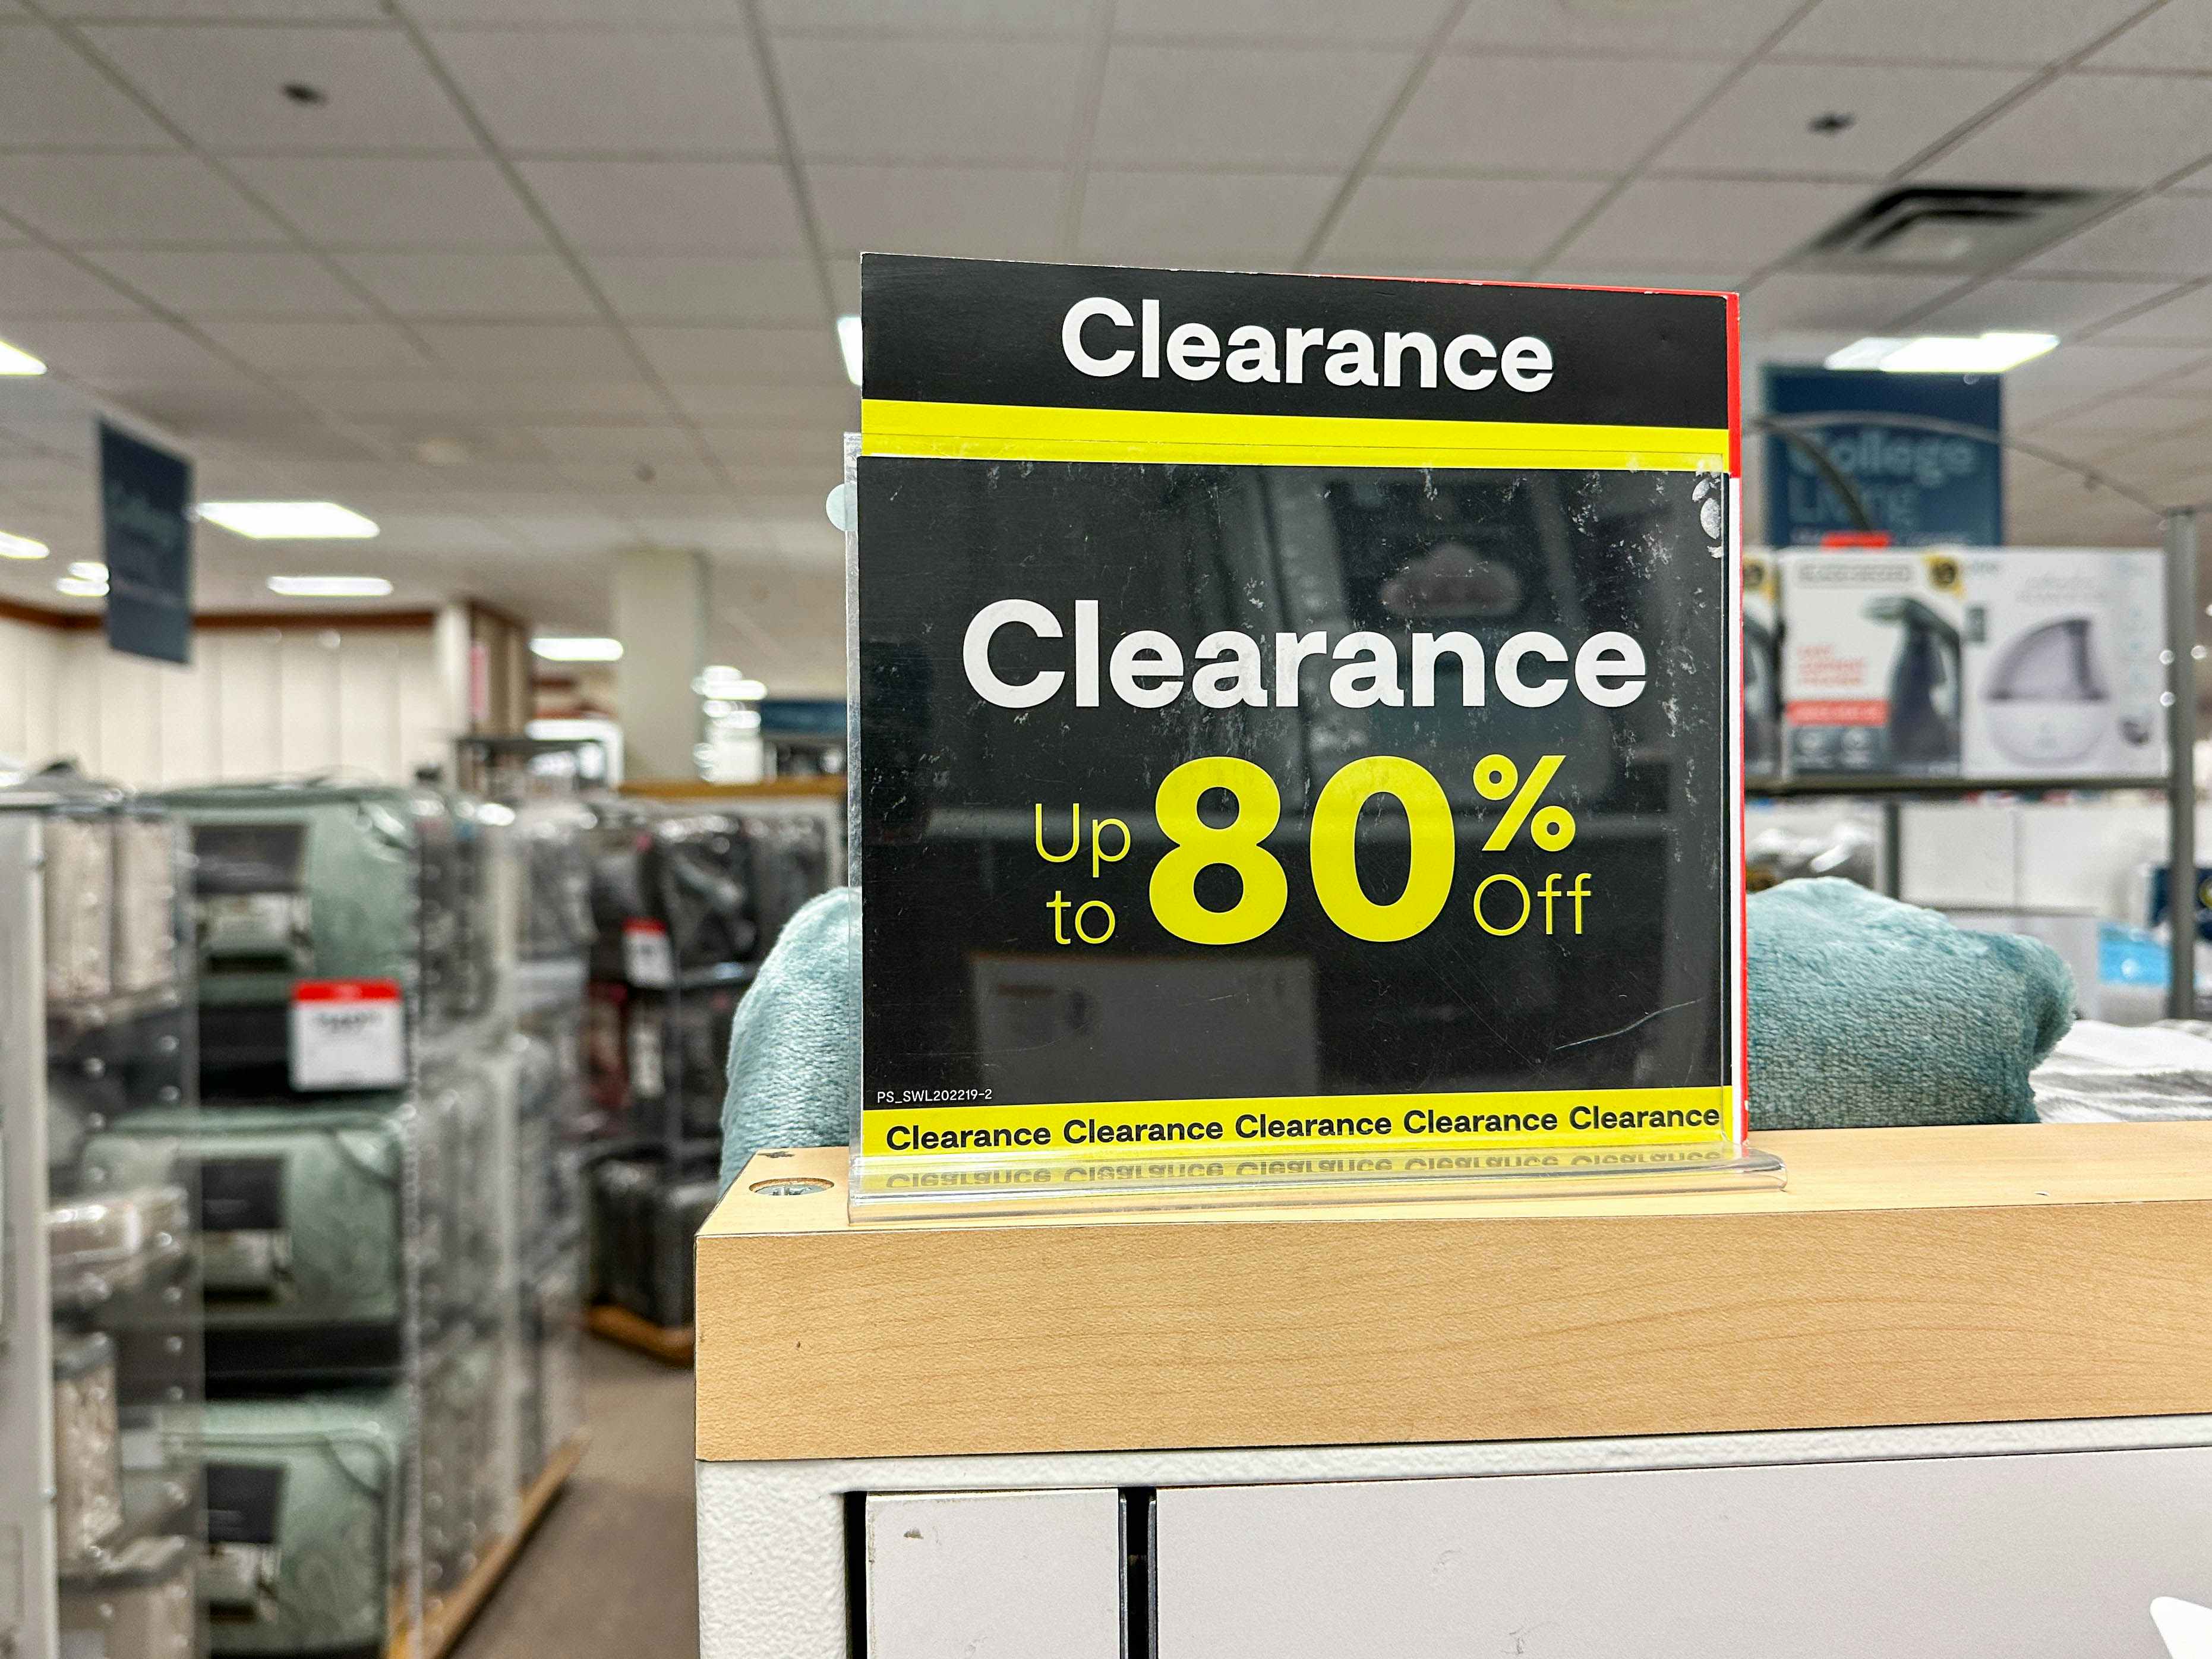 Money Saver: Kohl's clearance sale 